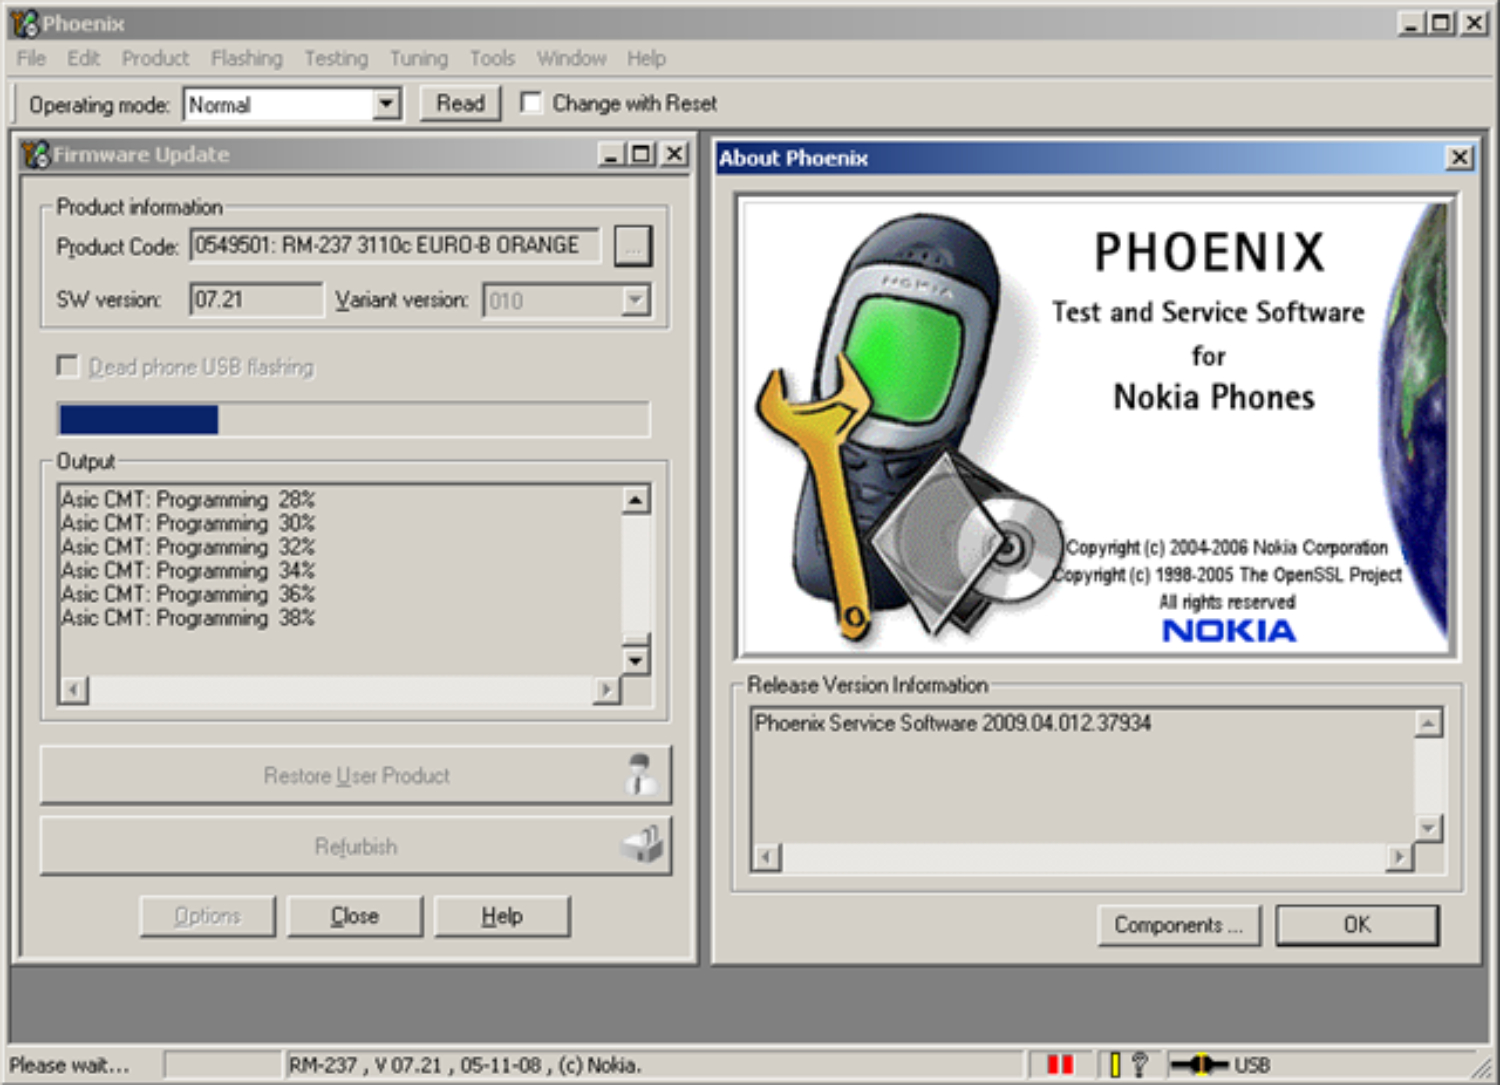 Nokia phoenix service software